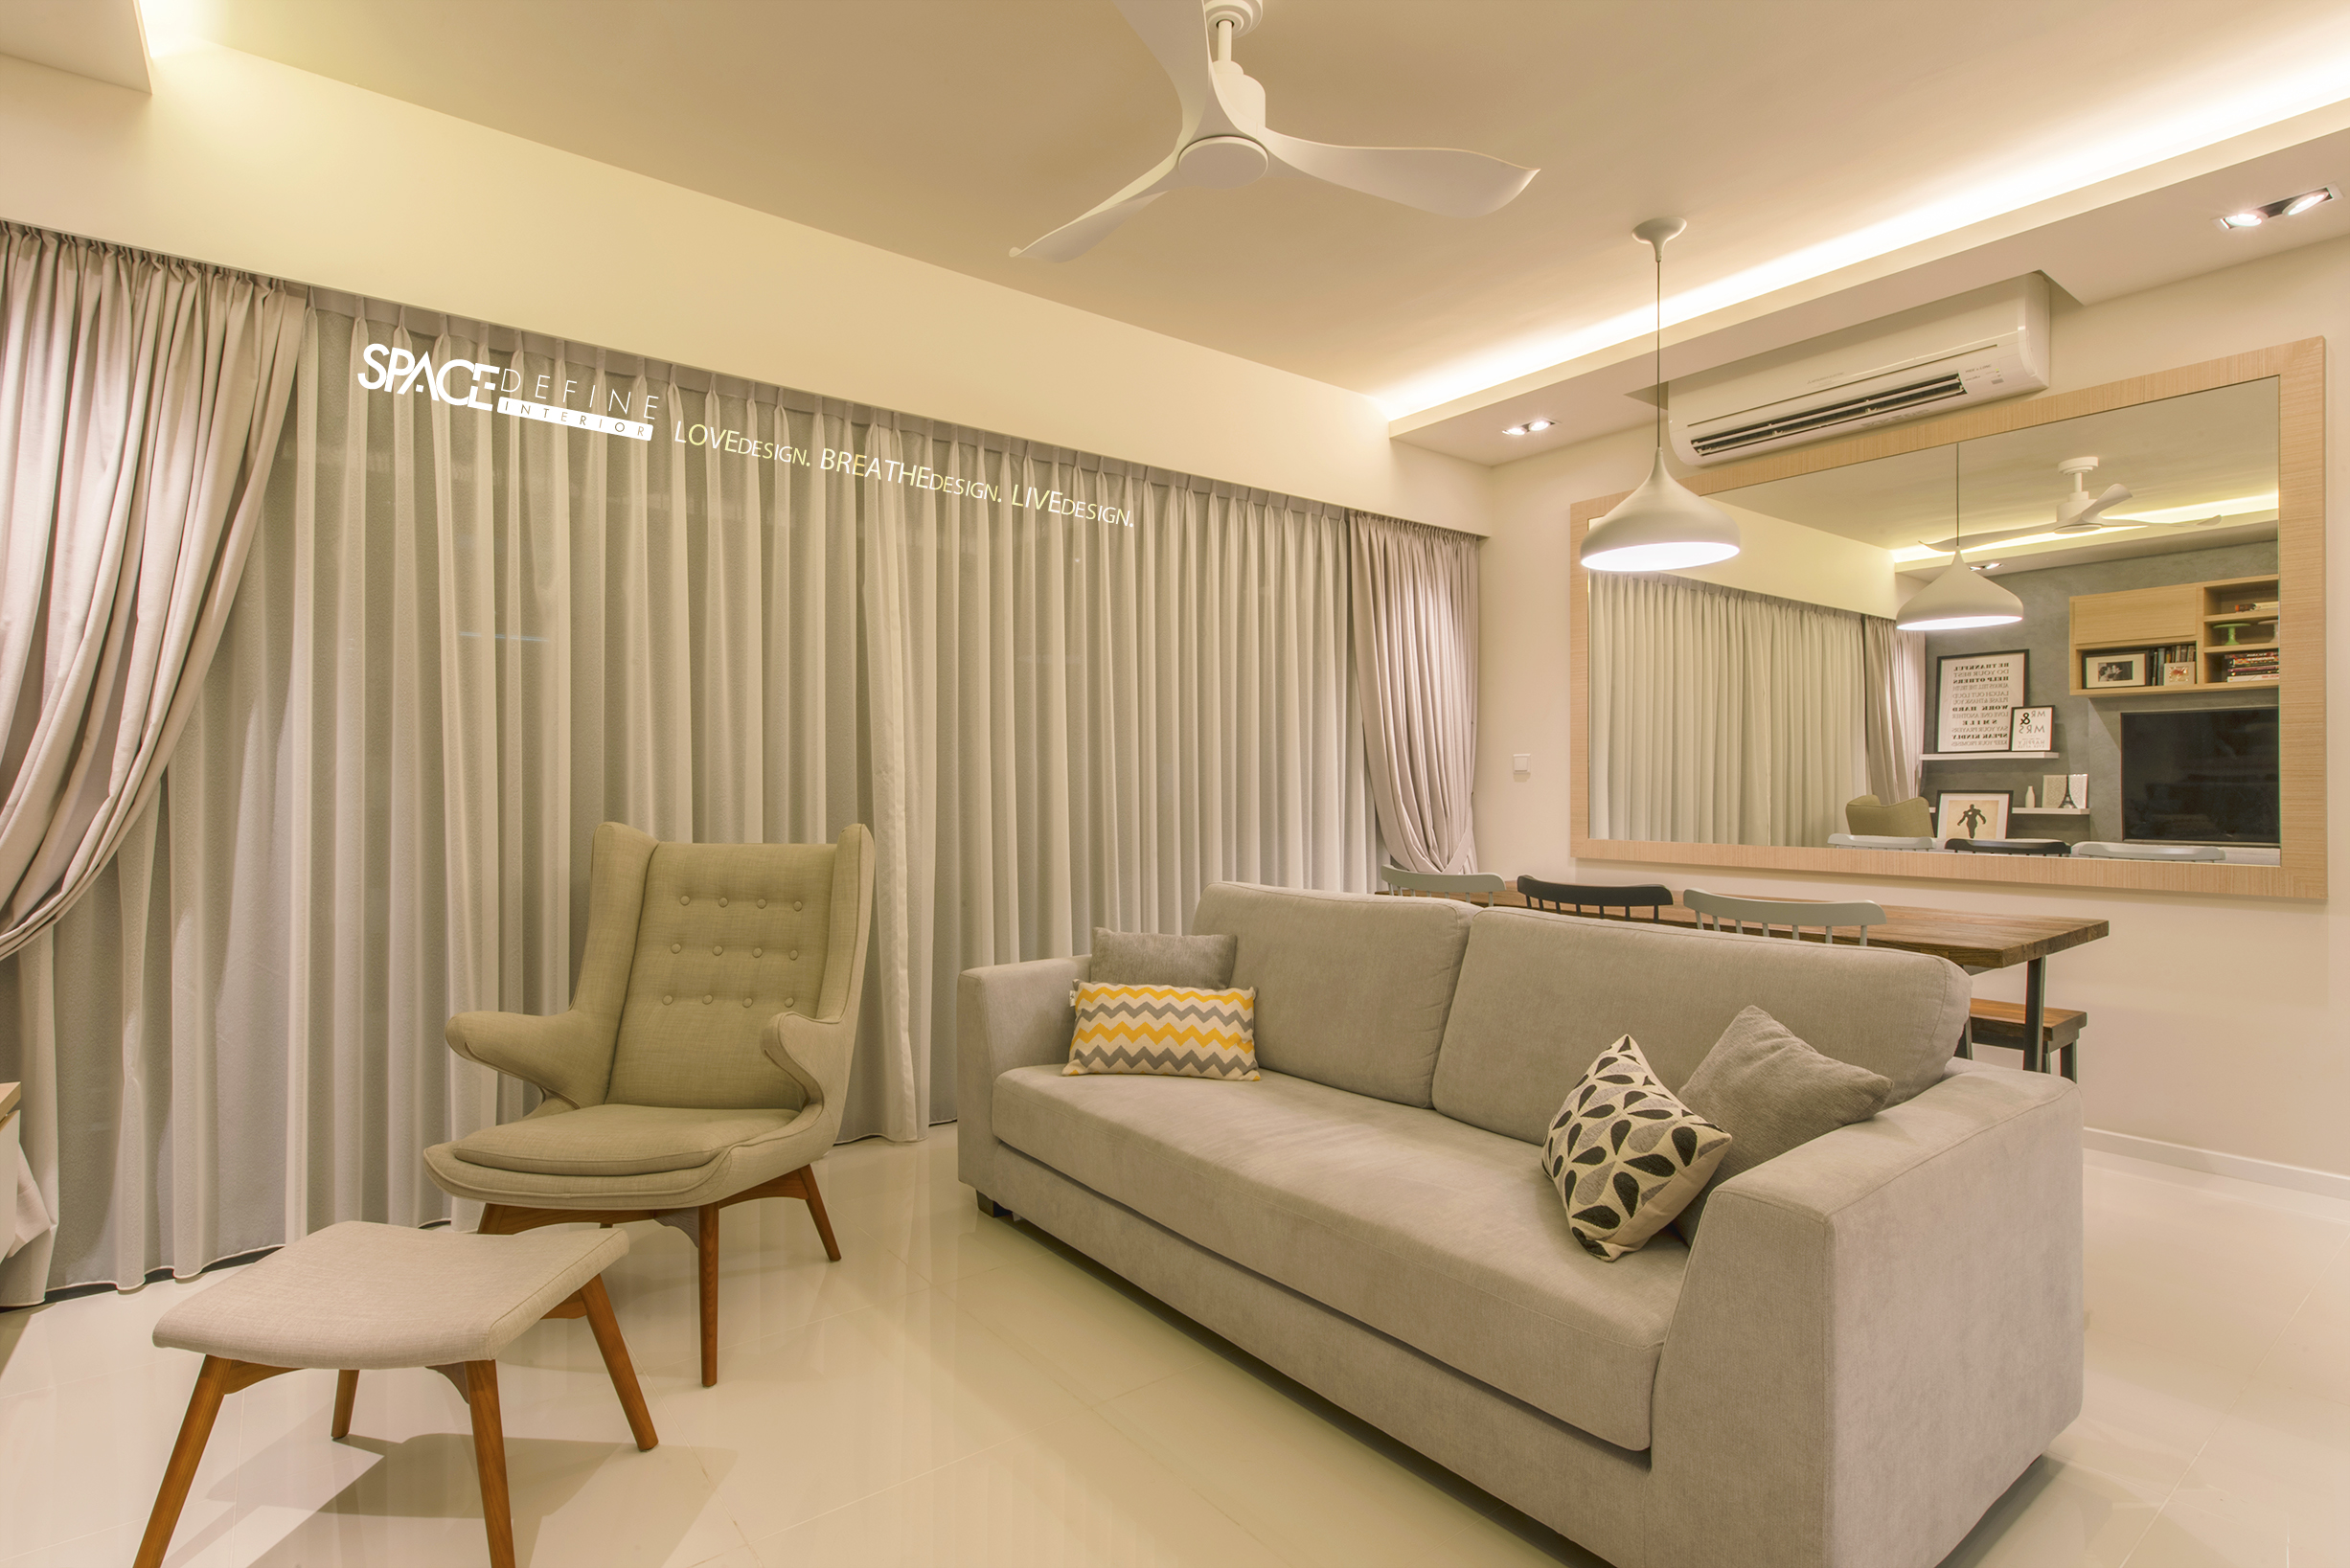 Modern, Scandinavian Design - Living Room - Condominium - Design by Space Define Interior